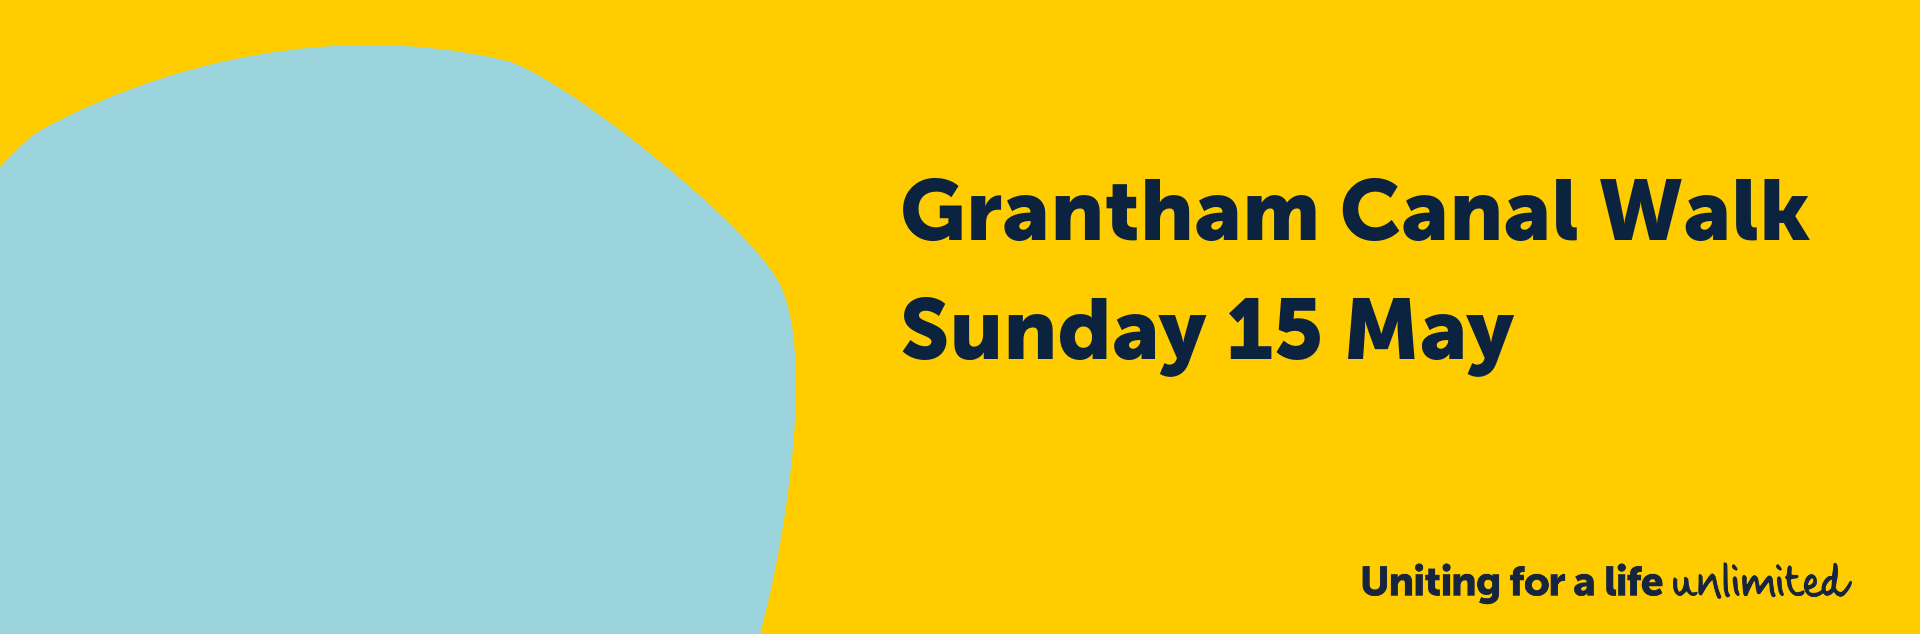 Grantham Canal Walk - Website Banner.png